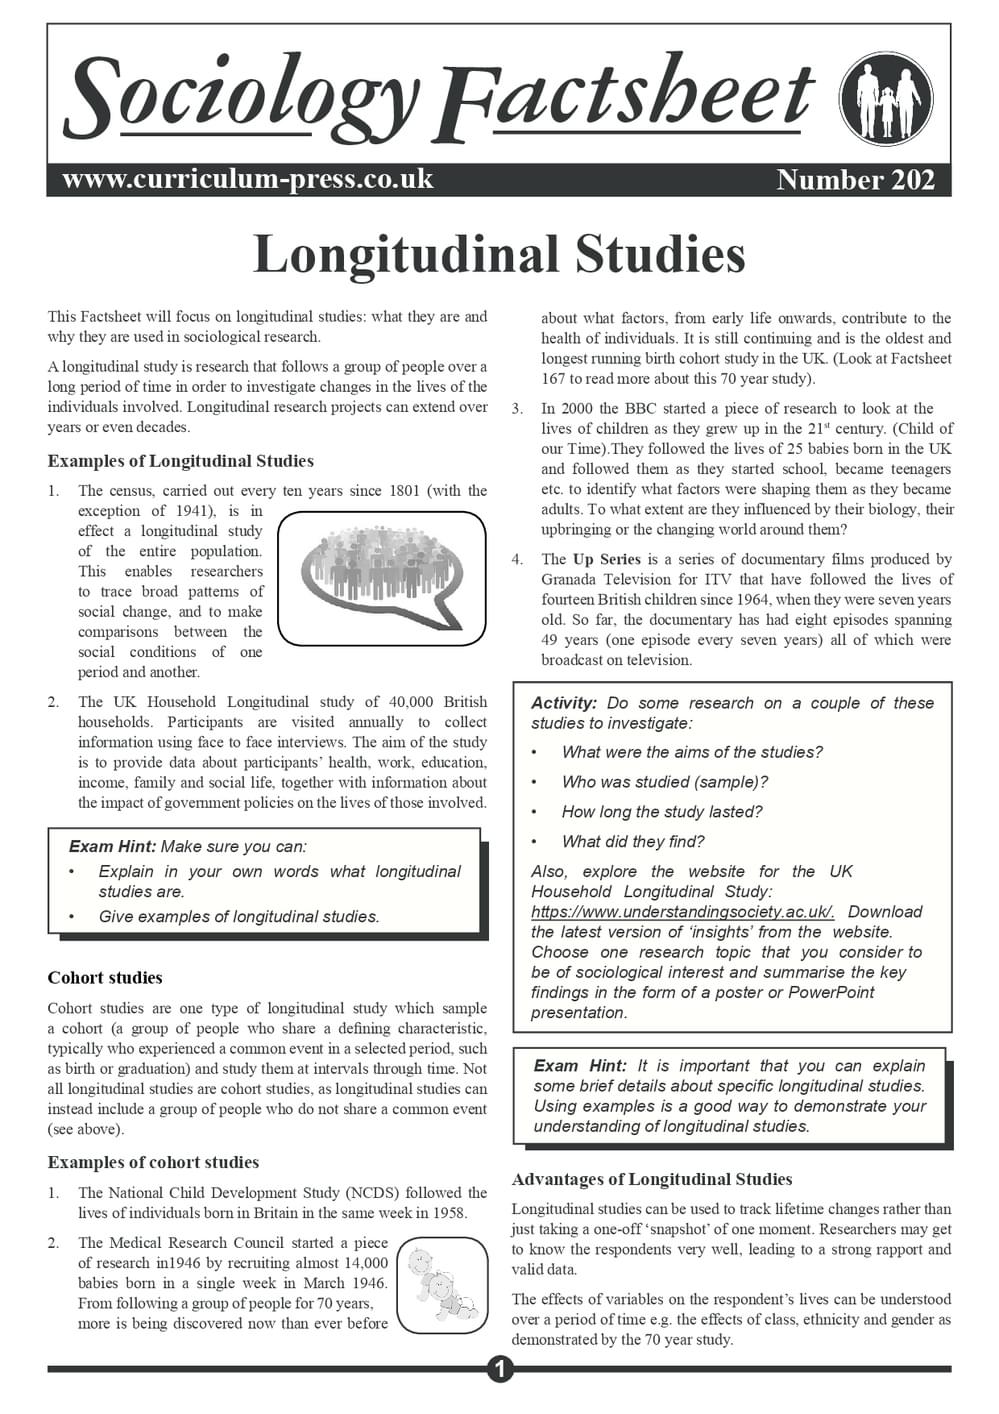 202 Longitudinal Studies